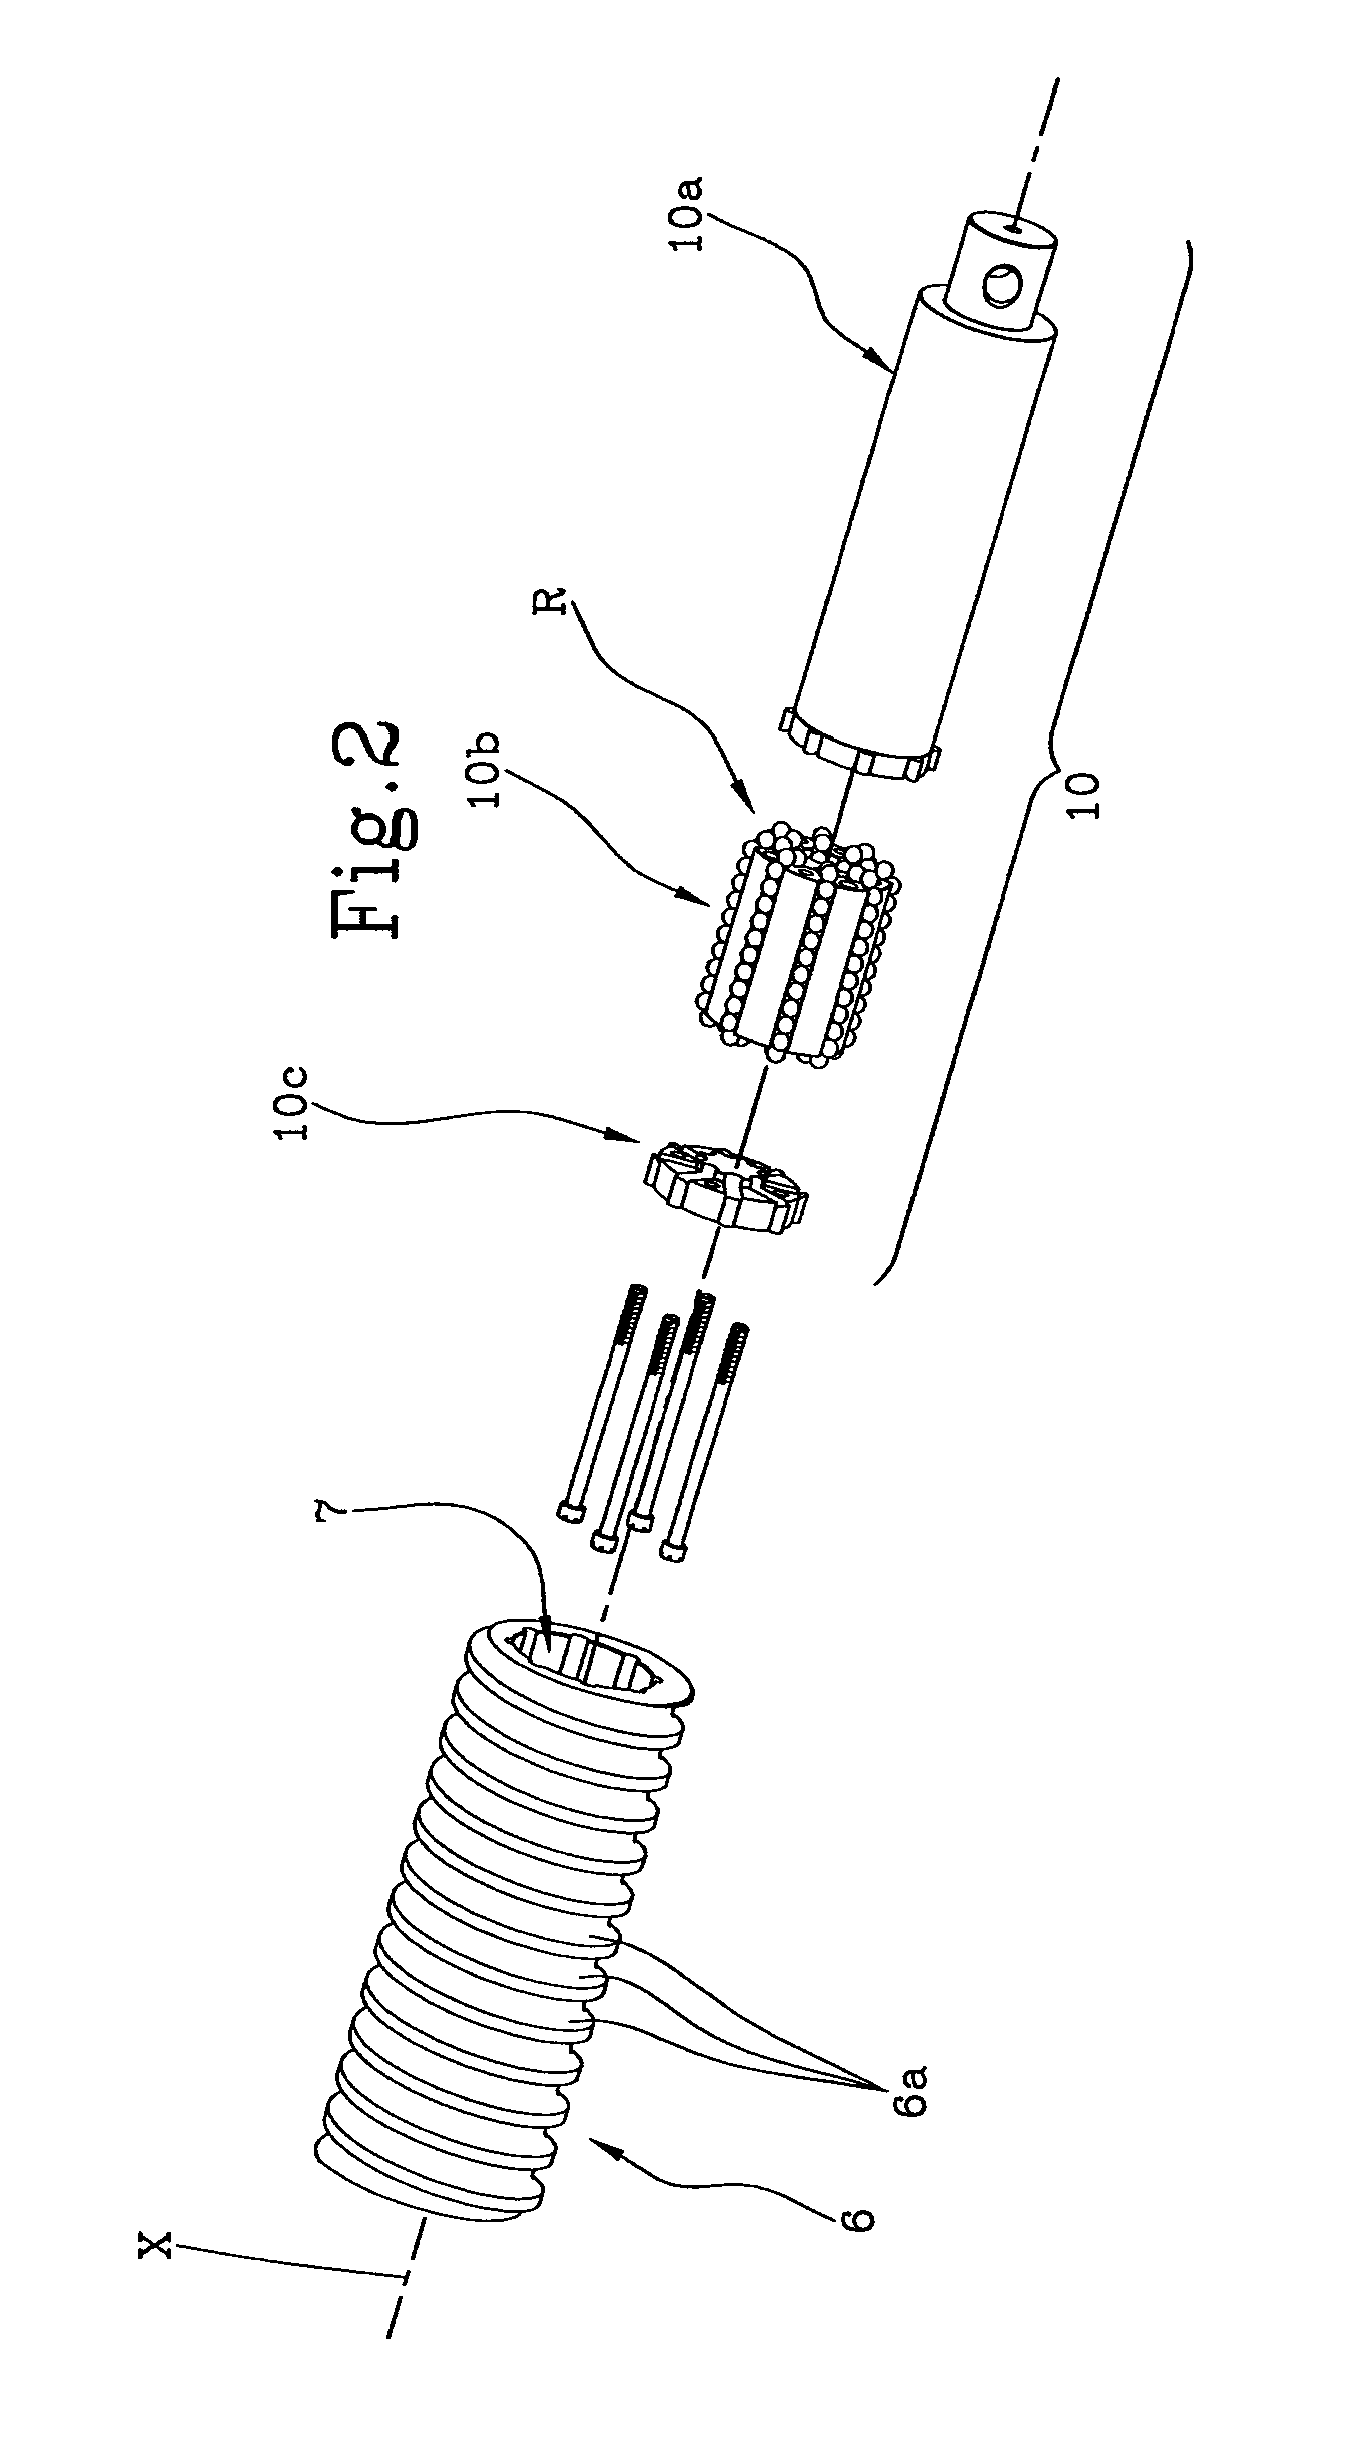 Linear electro-mechanical actuator